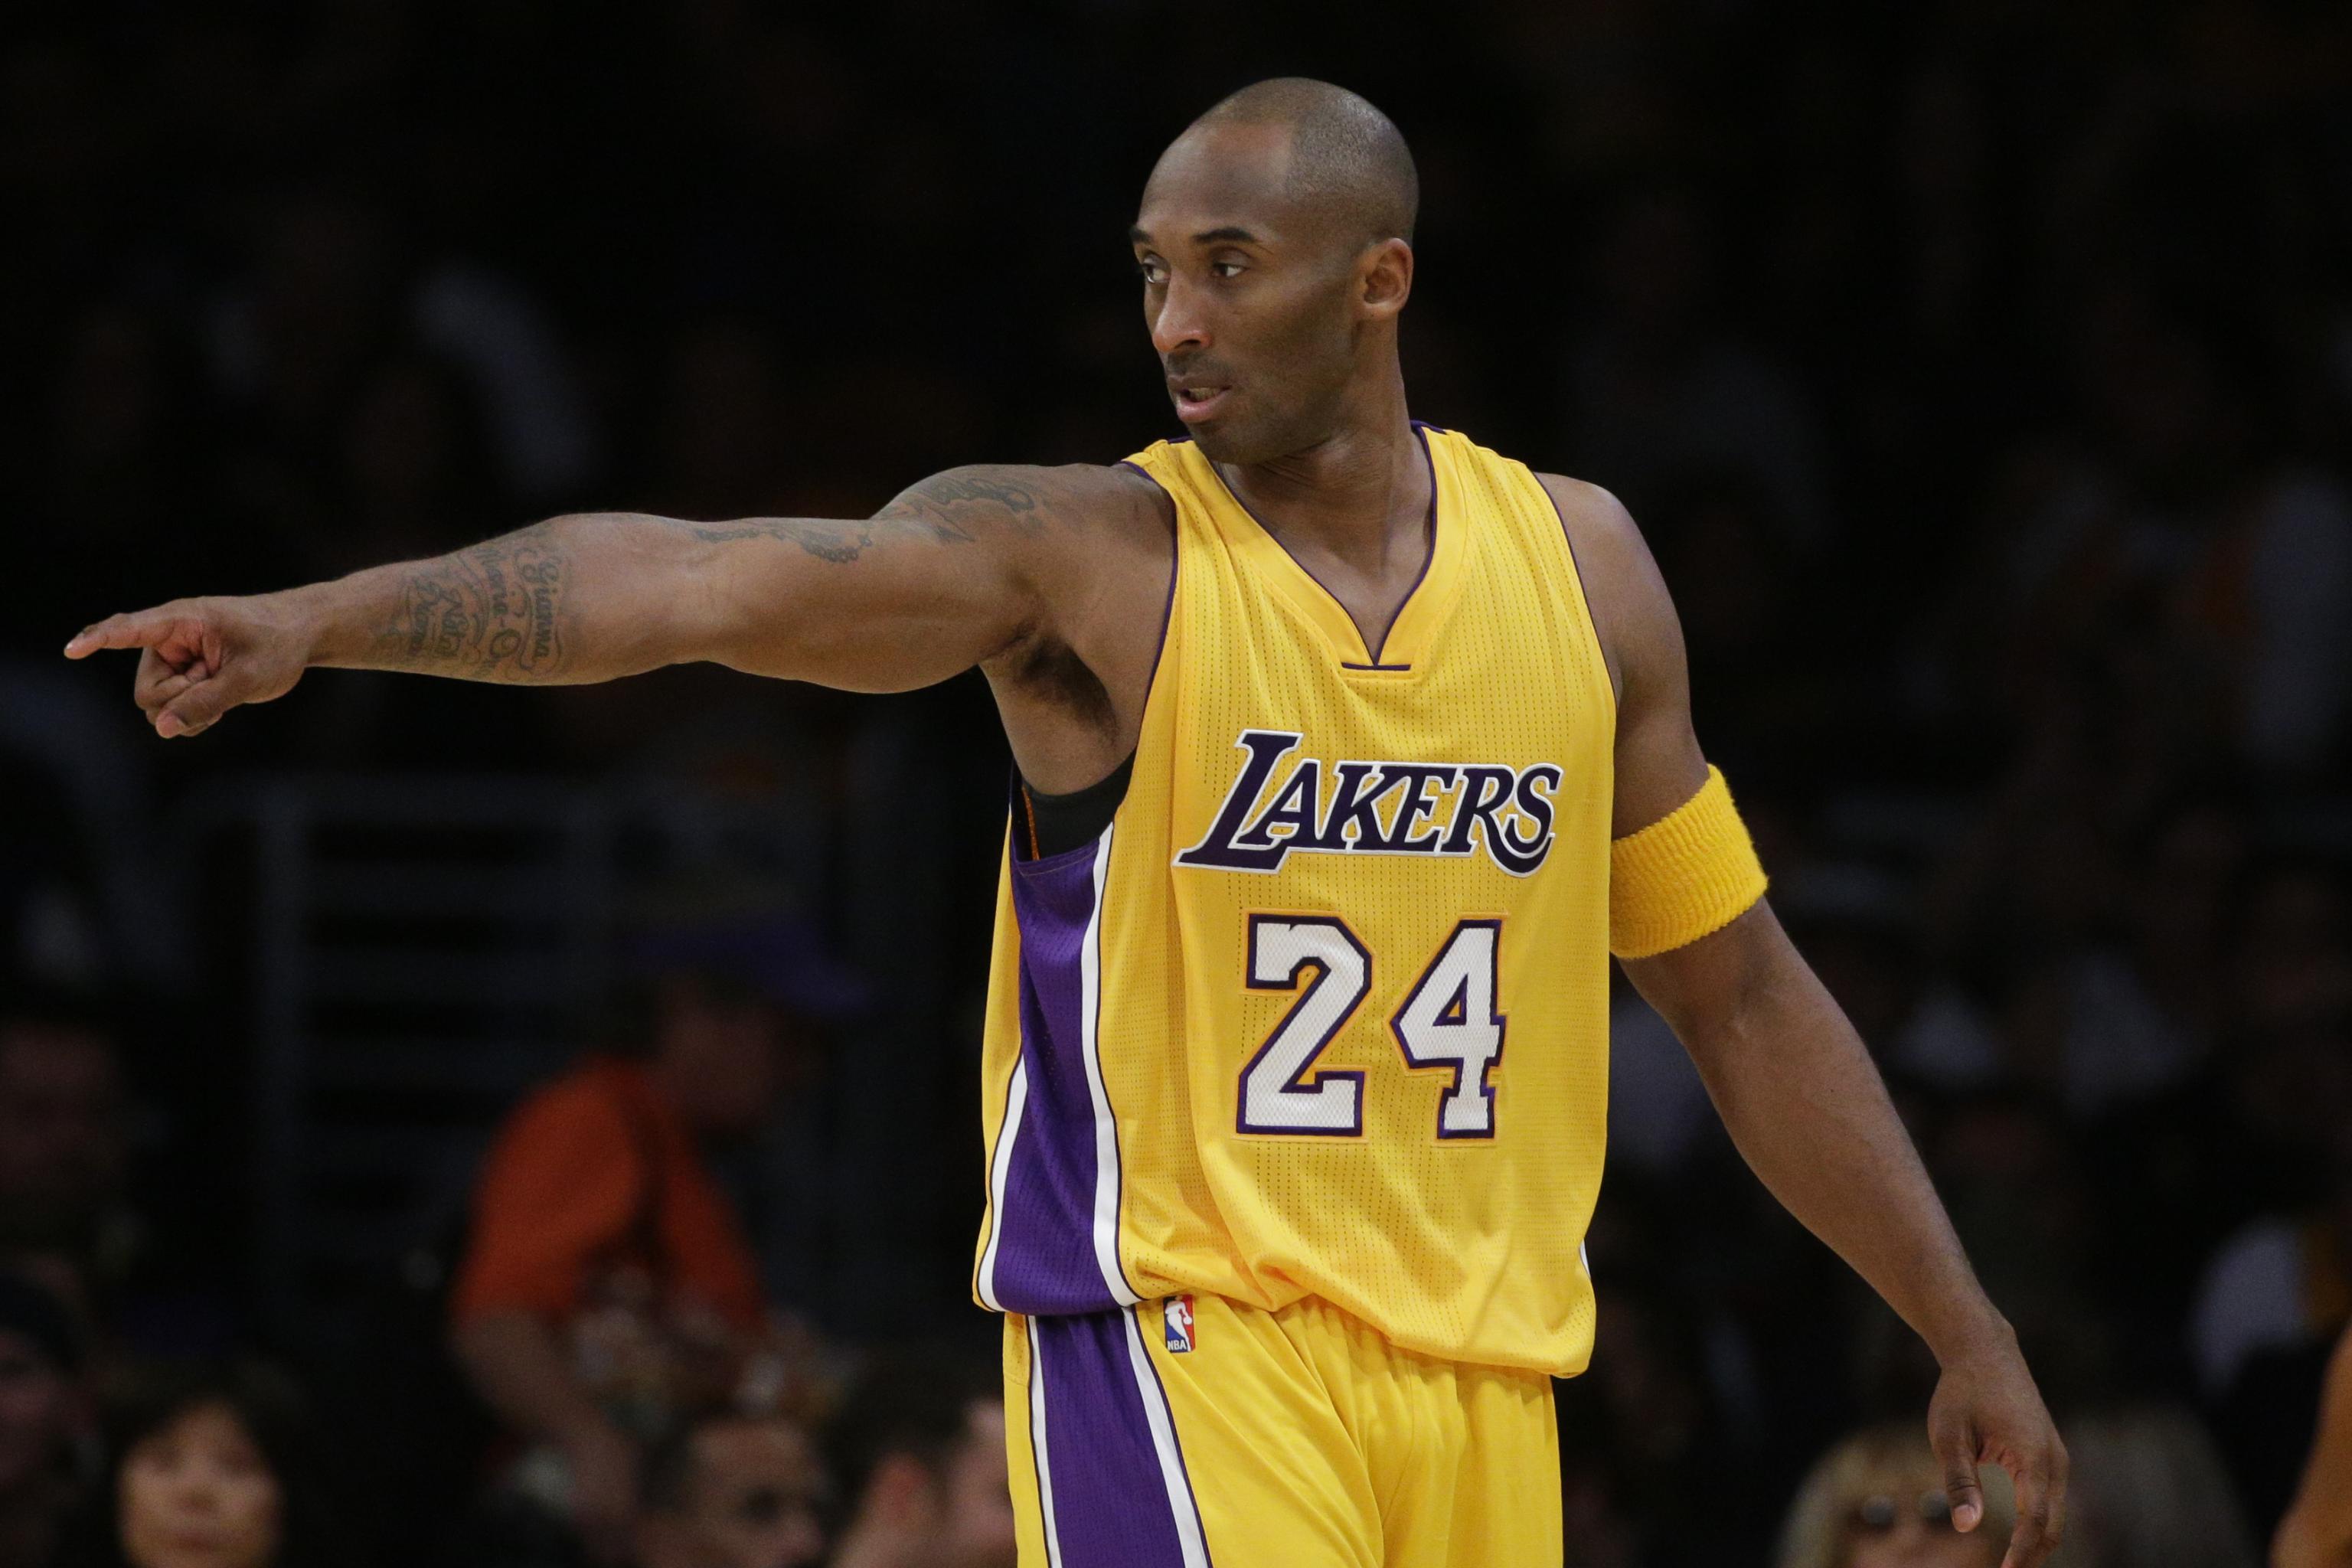 Lakers' Jordan Clarkson developed grinder mentality growing up in